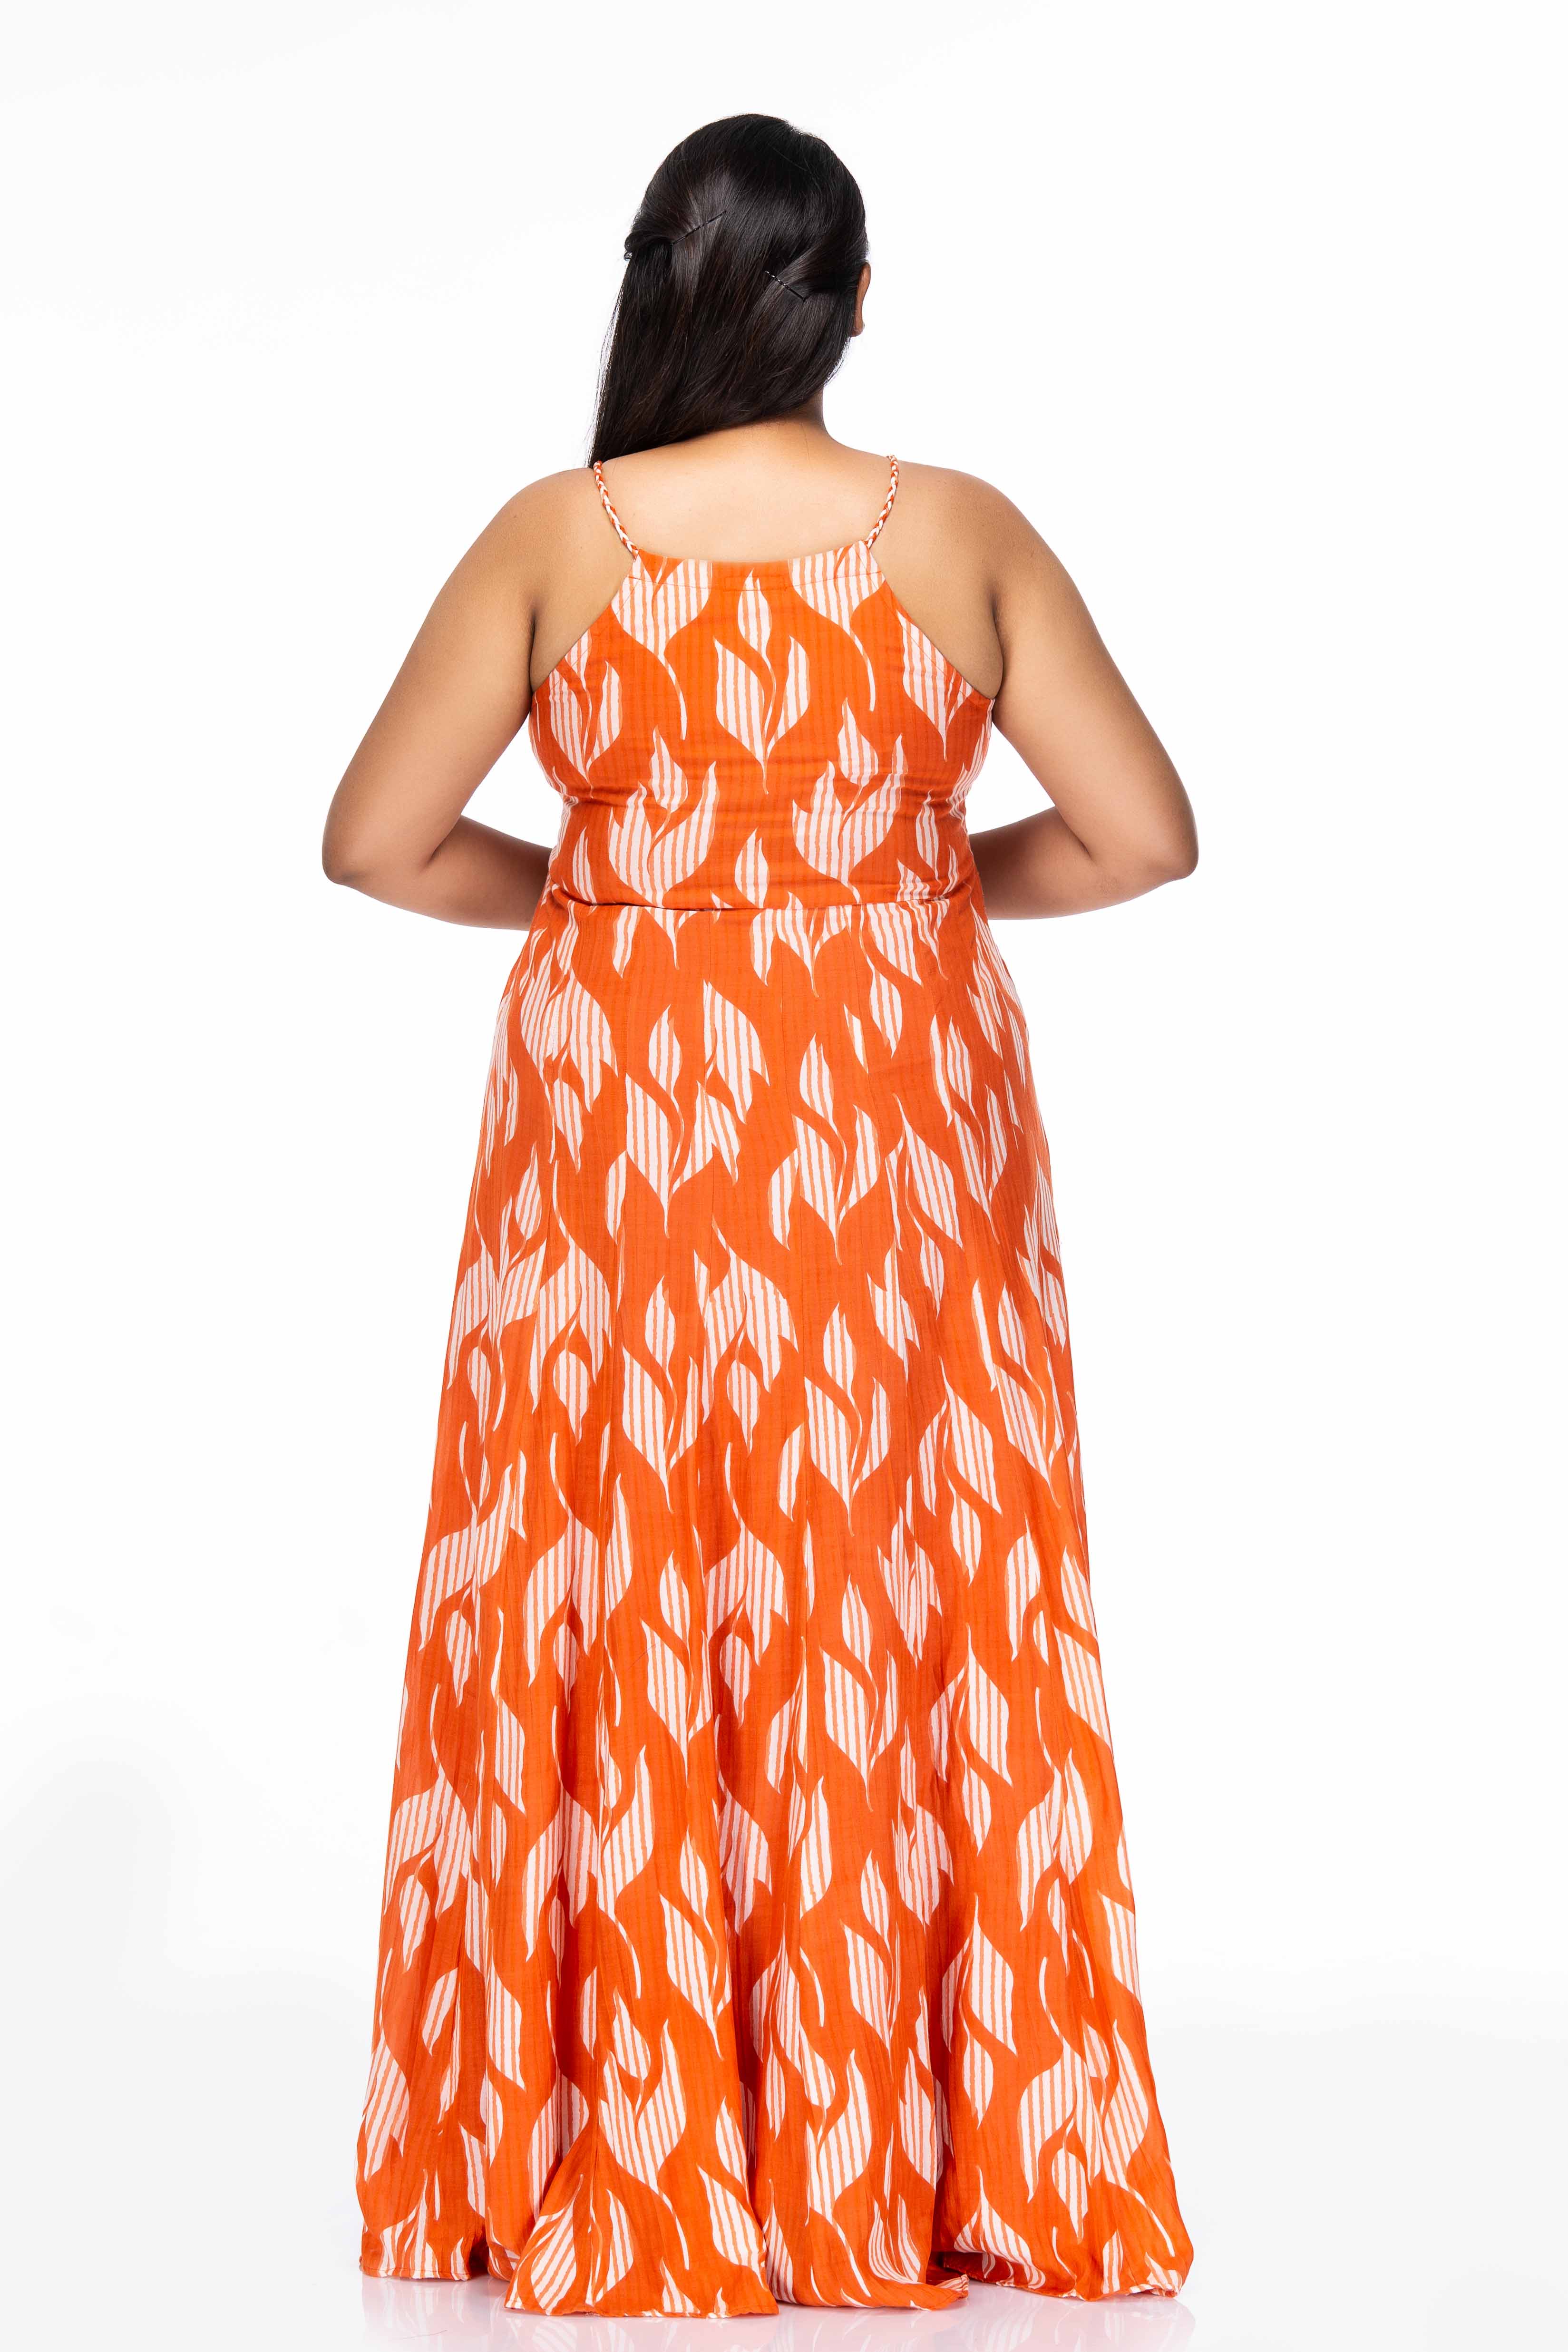 Floral Maxi Dress - Orange Saffron Floral Print Maxi Dress - LotusLane